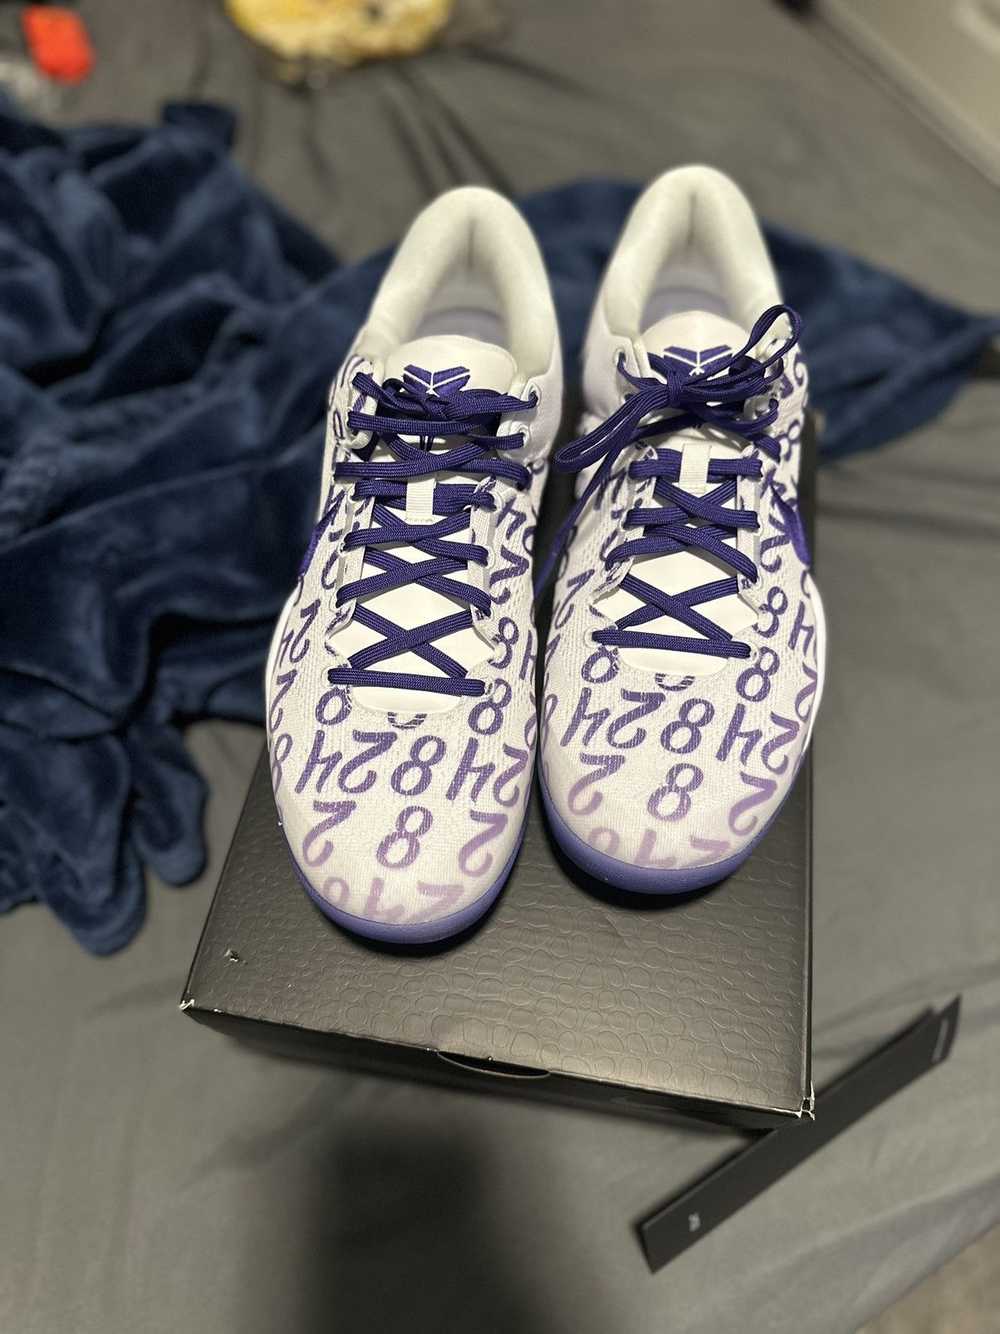 Nike kobe 8 proto court purple - image 2